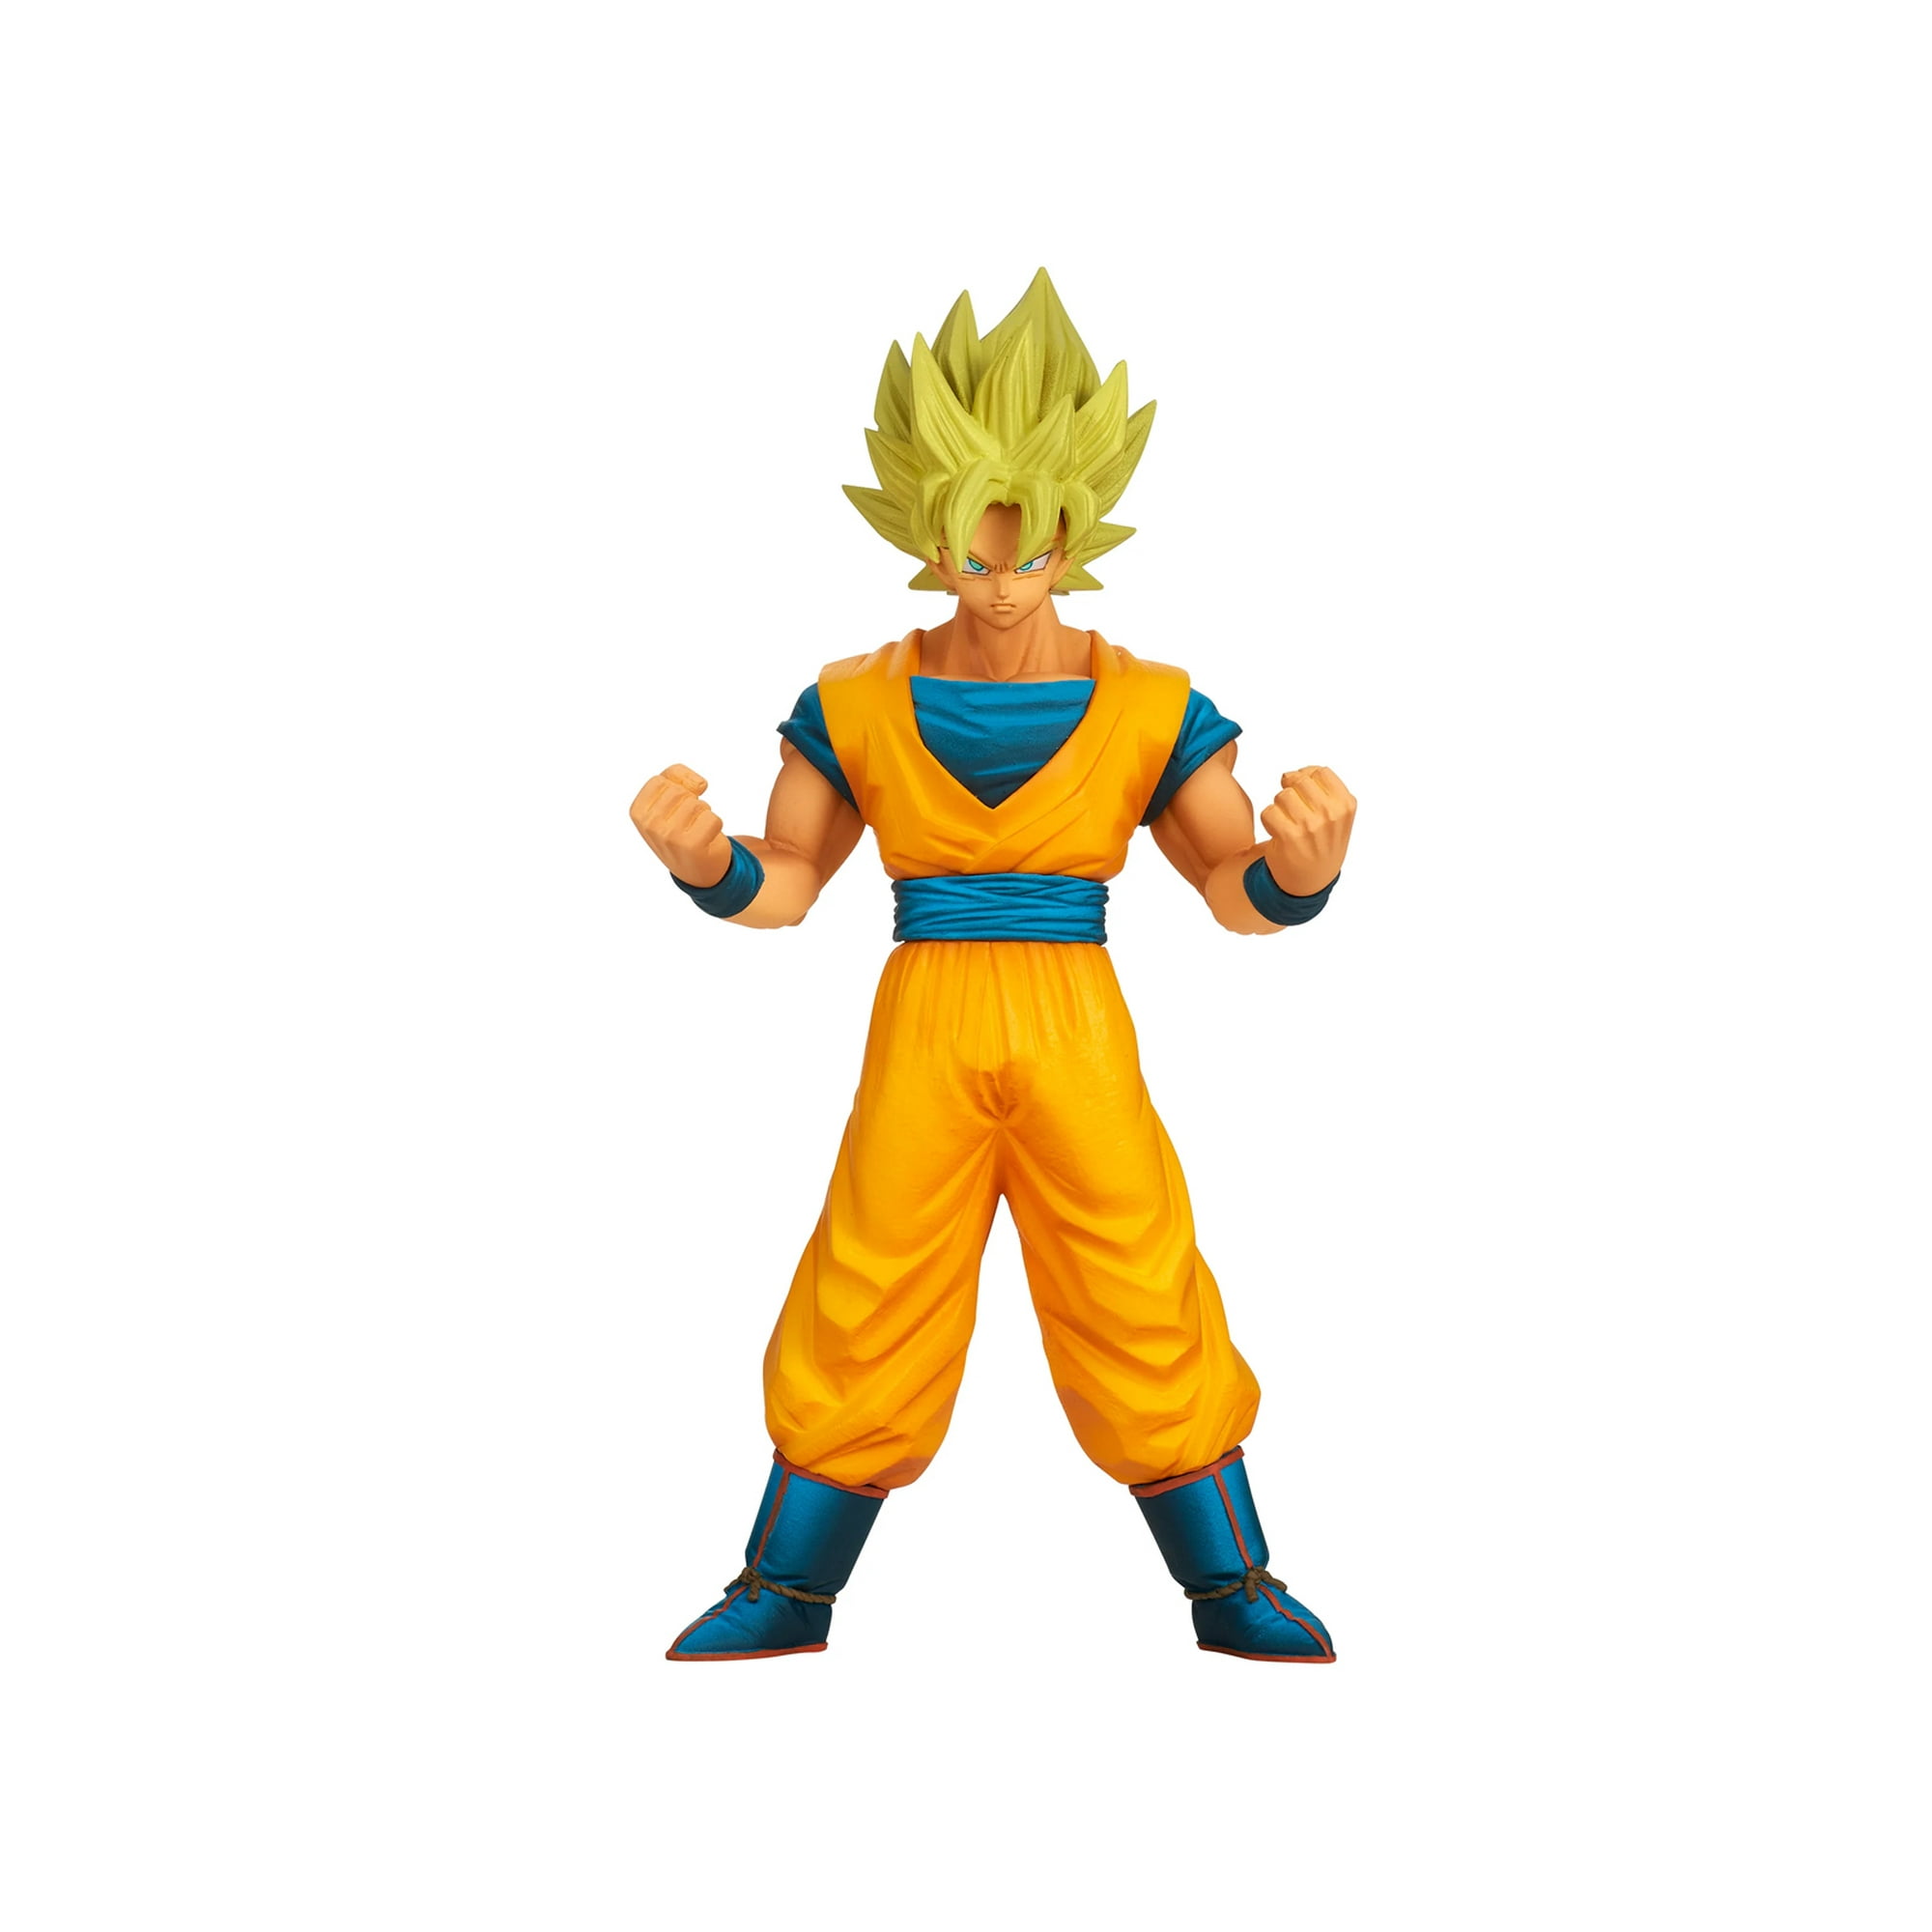 Goku super saiyan dragon ball z burning fighters banpresto banpresto banpresto